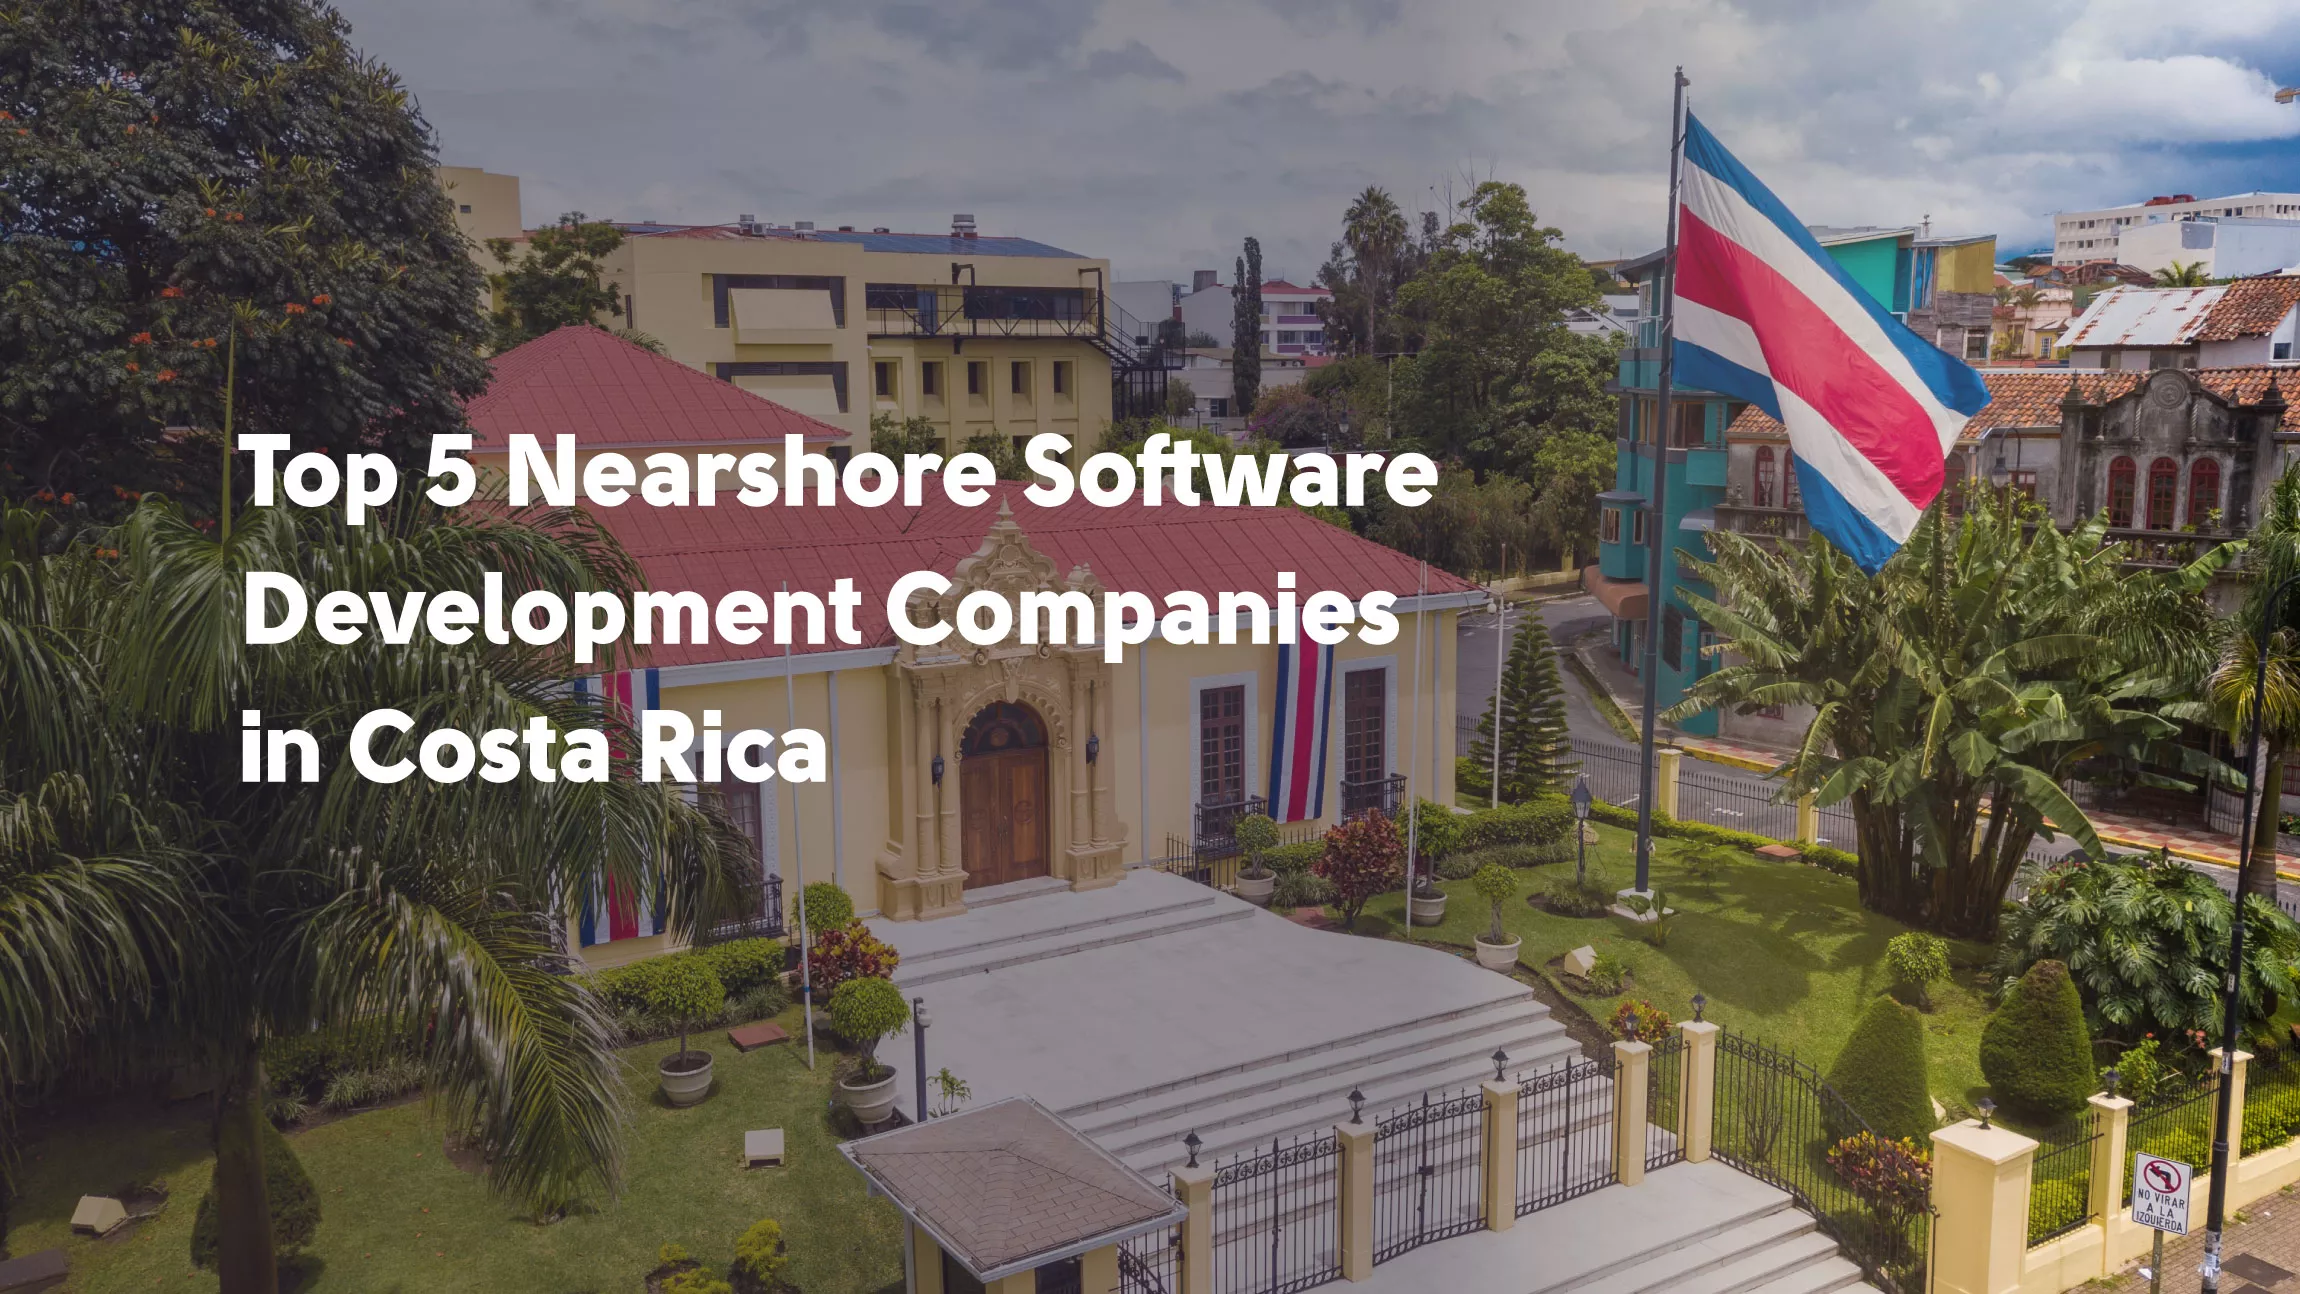 Nearshore software development companies in Costa Rica